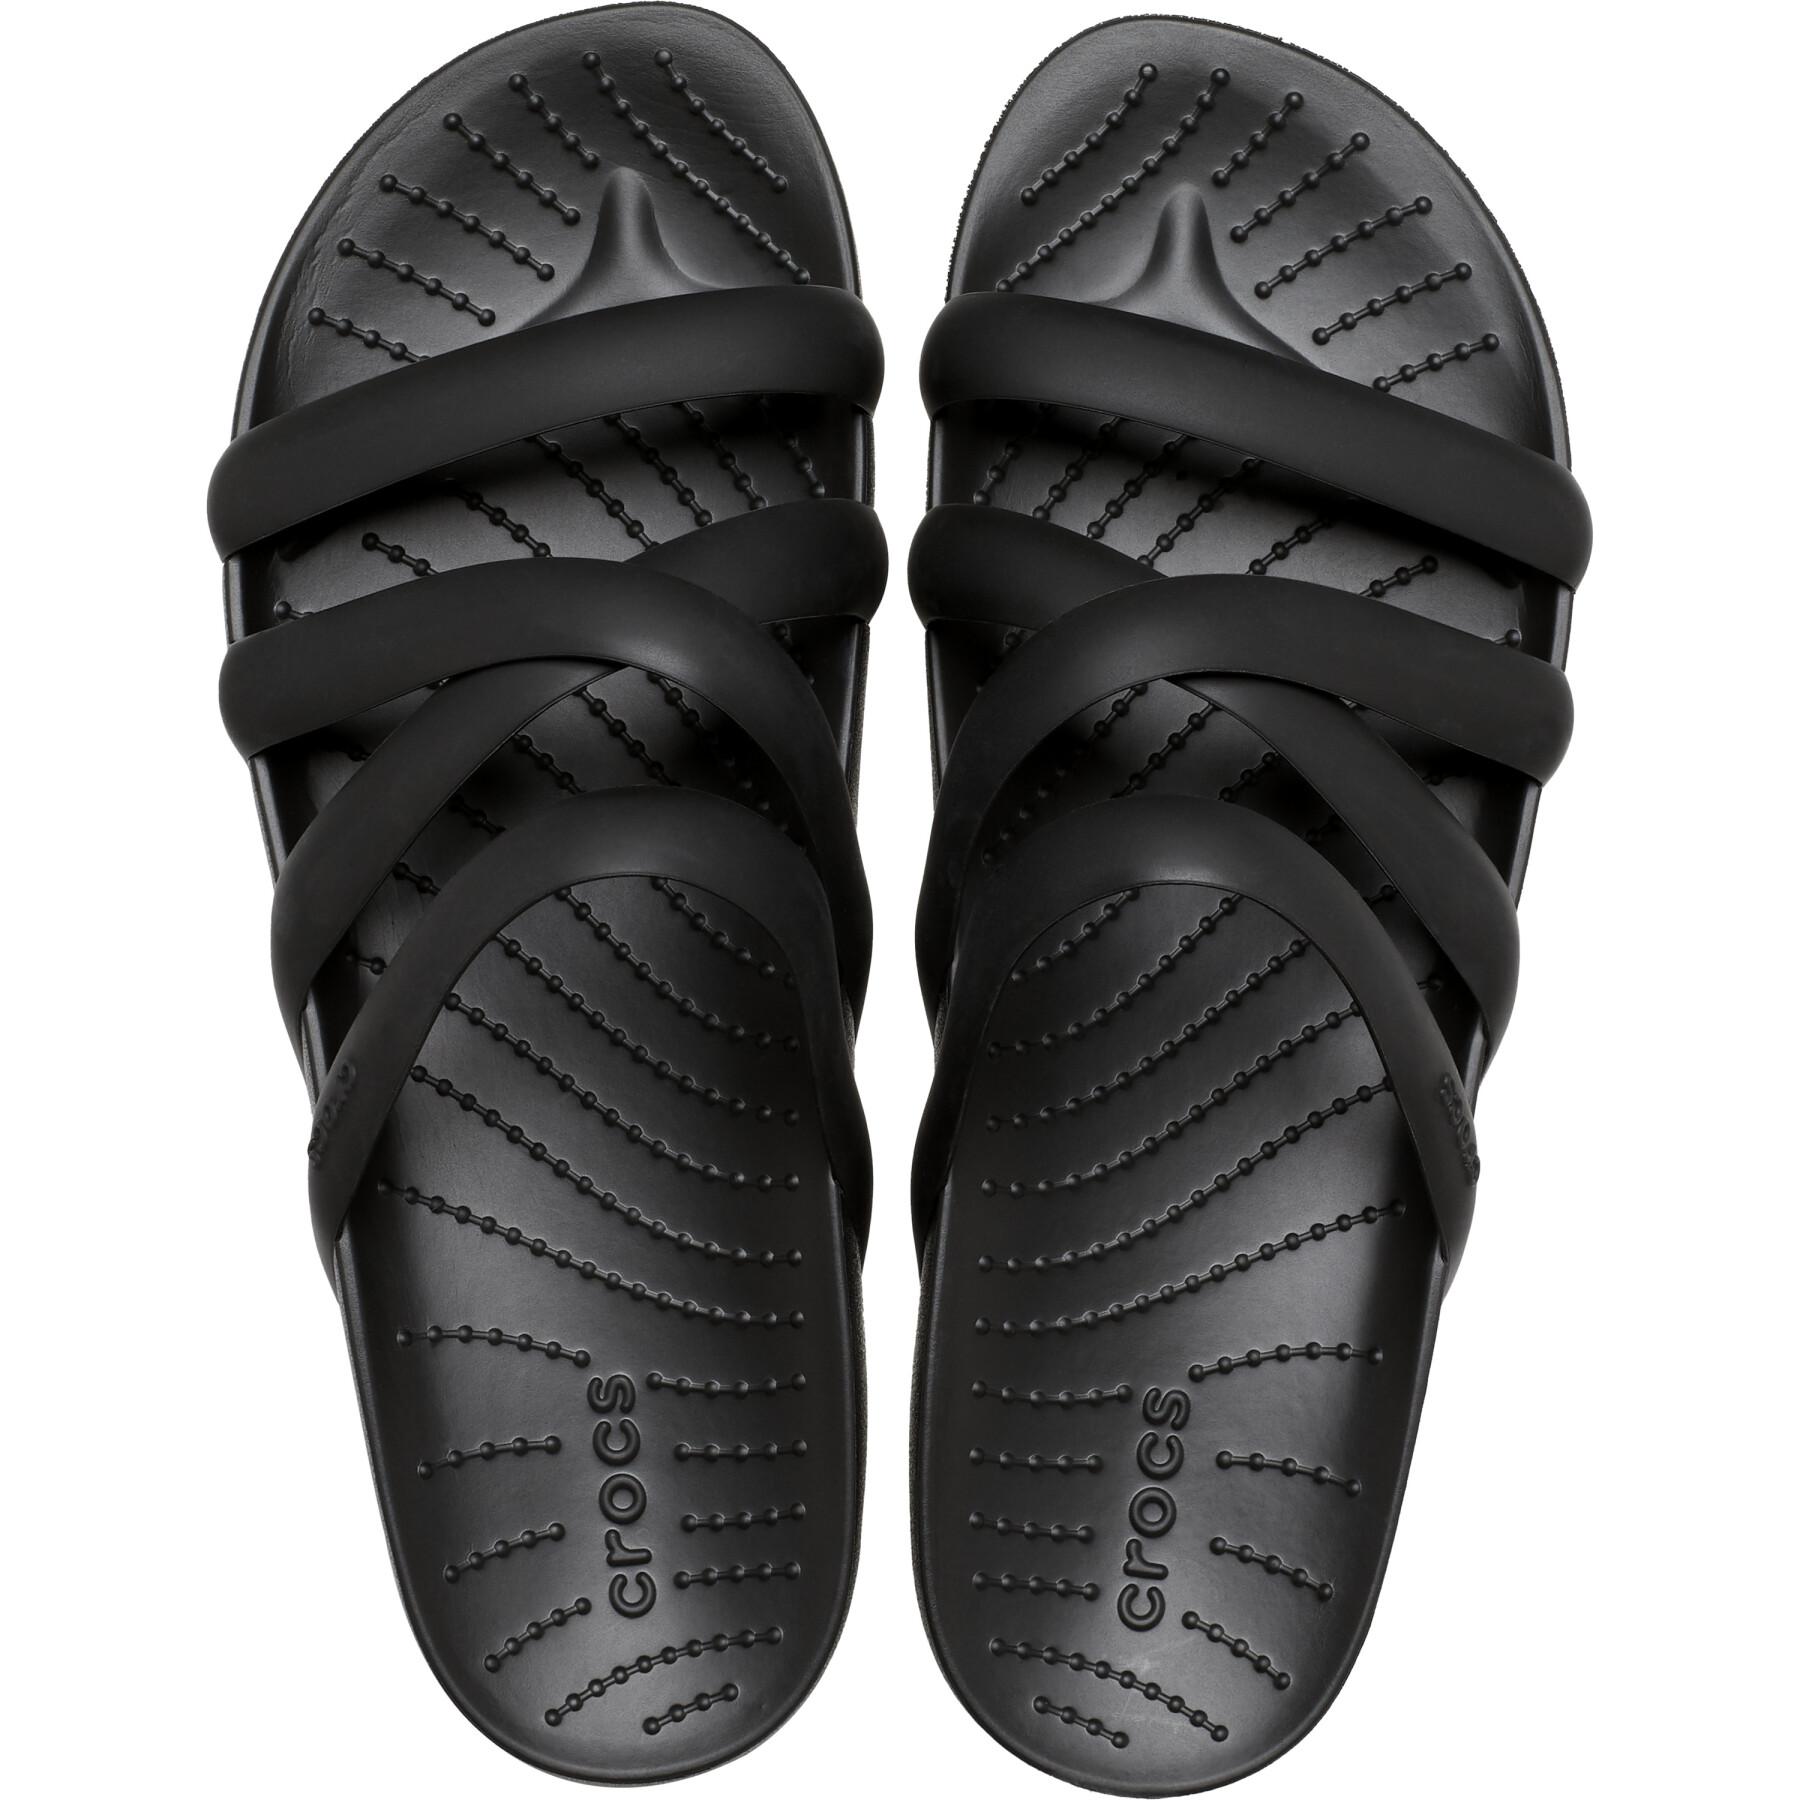 Women's sandals Crocs Crocs Splash Strappy